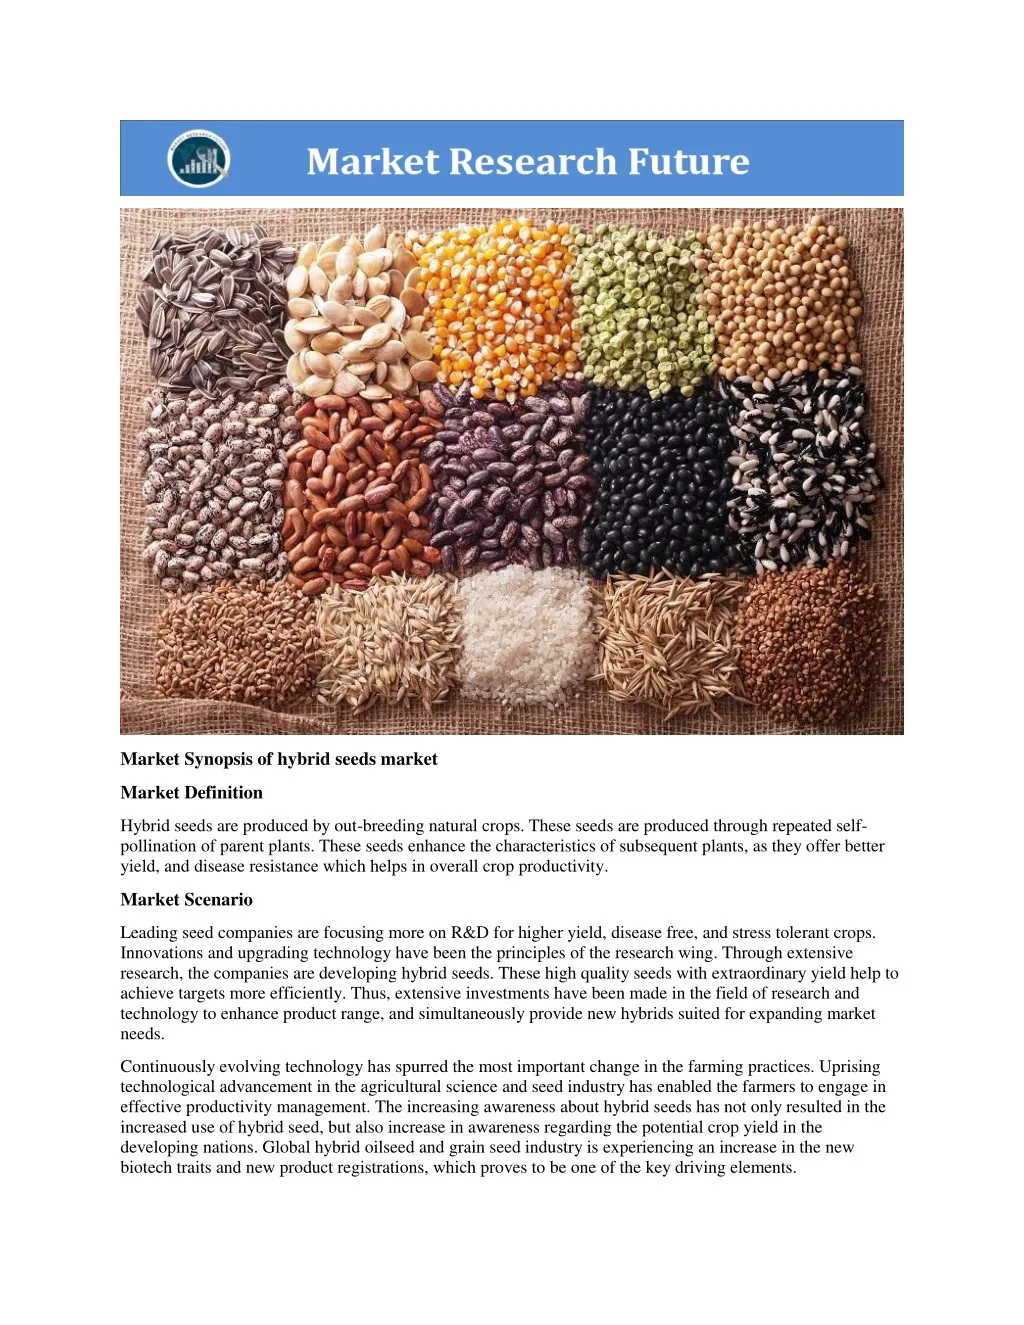 market synopsis of hybrid seeds market